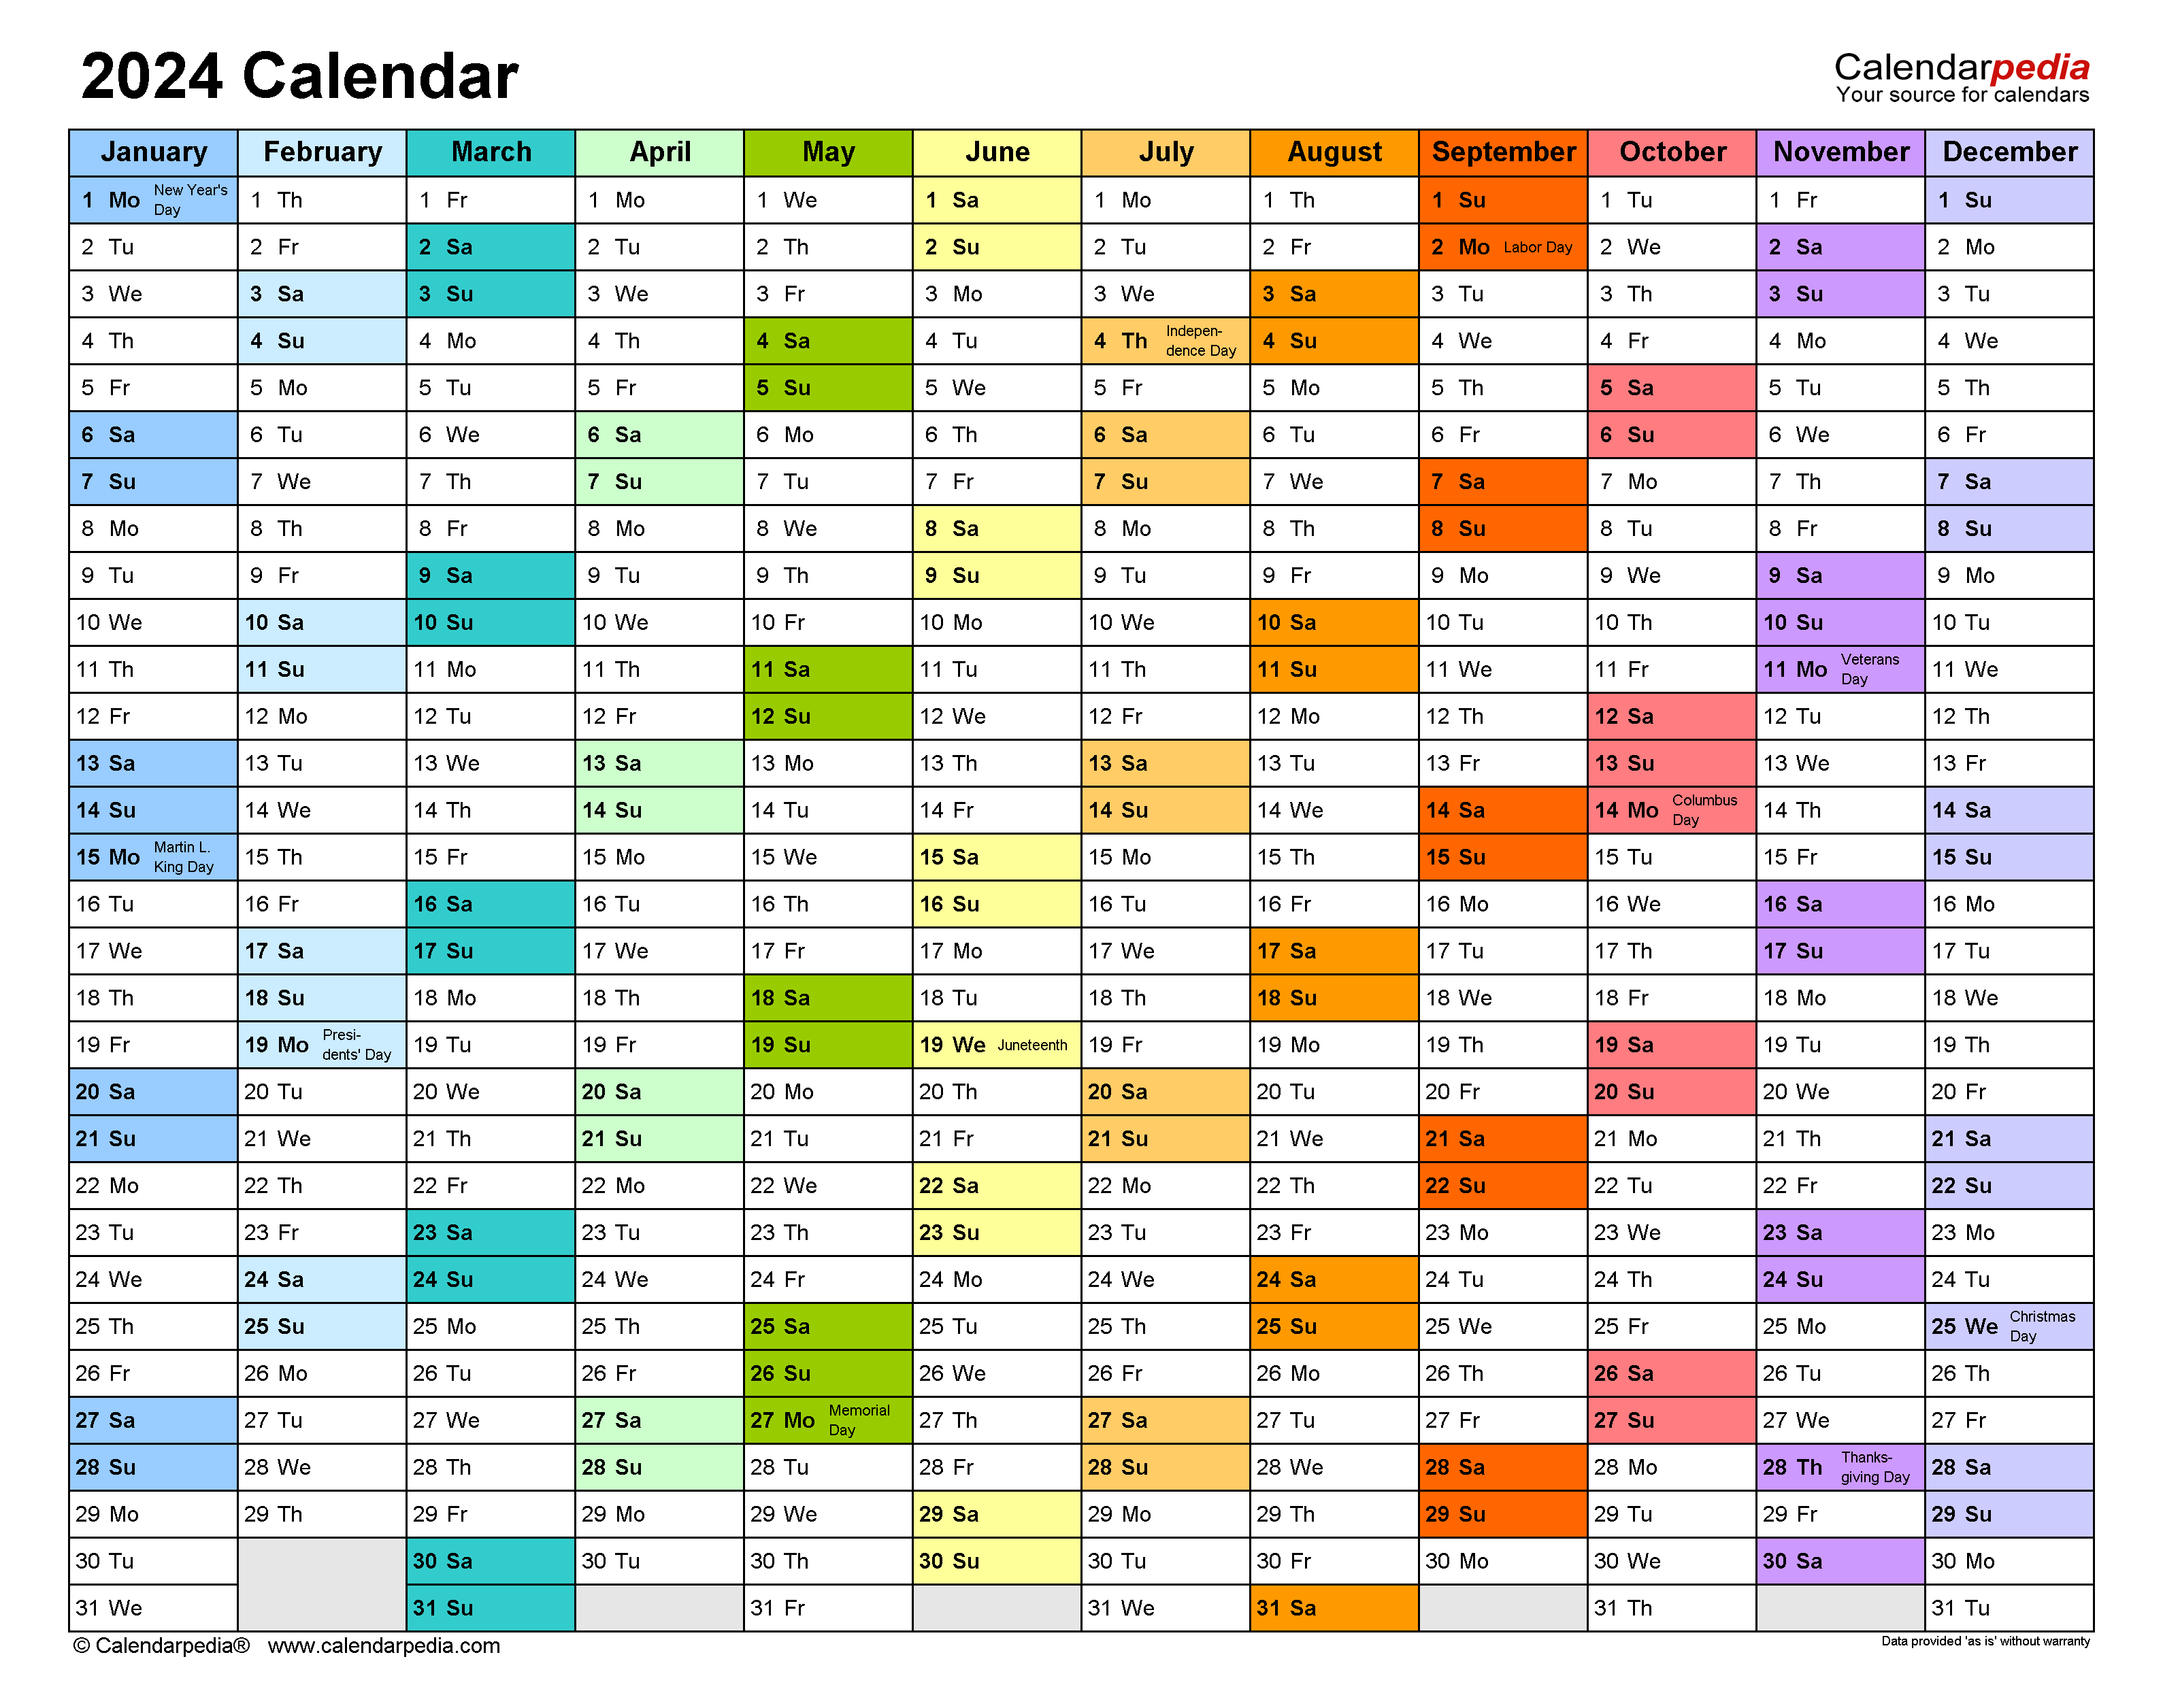 2024 Calendar - Free Printable Word Templates - Calendarpedia for 2024 Calendar Printable Word